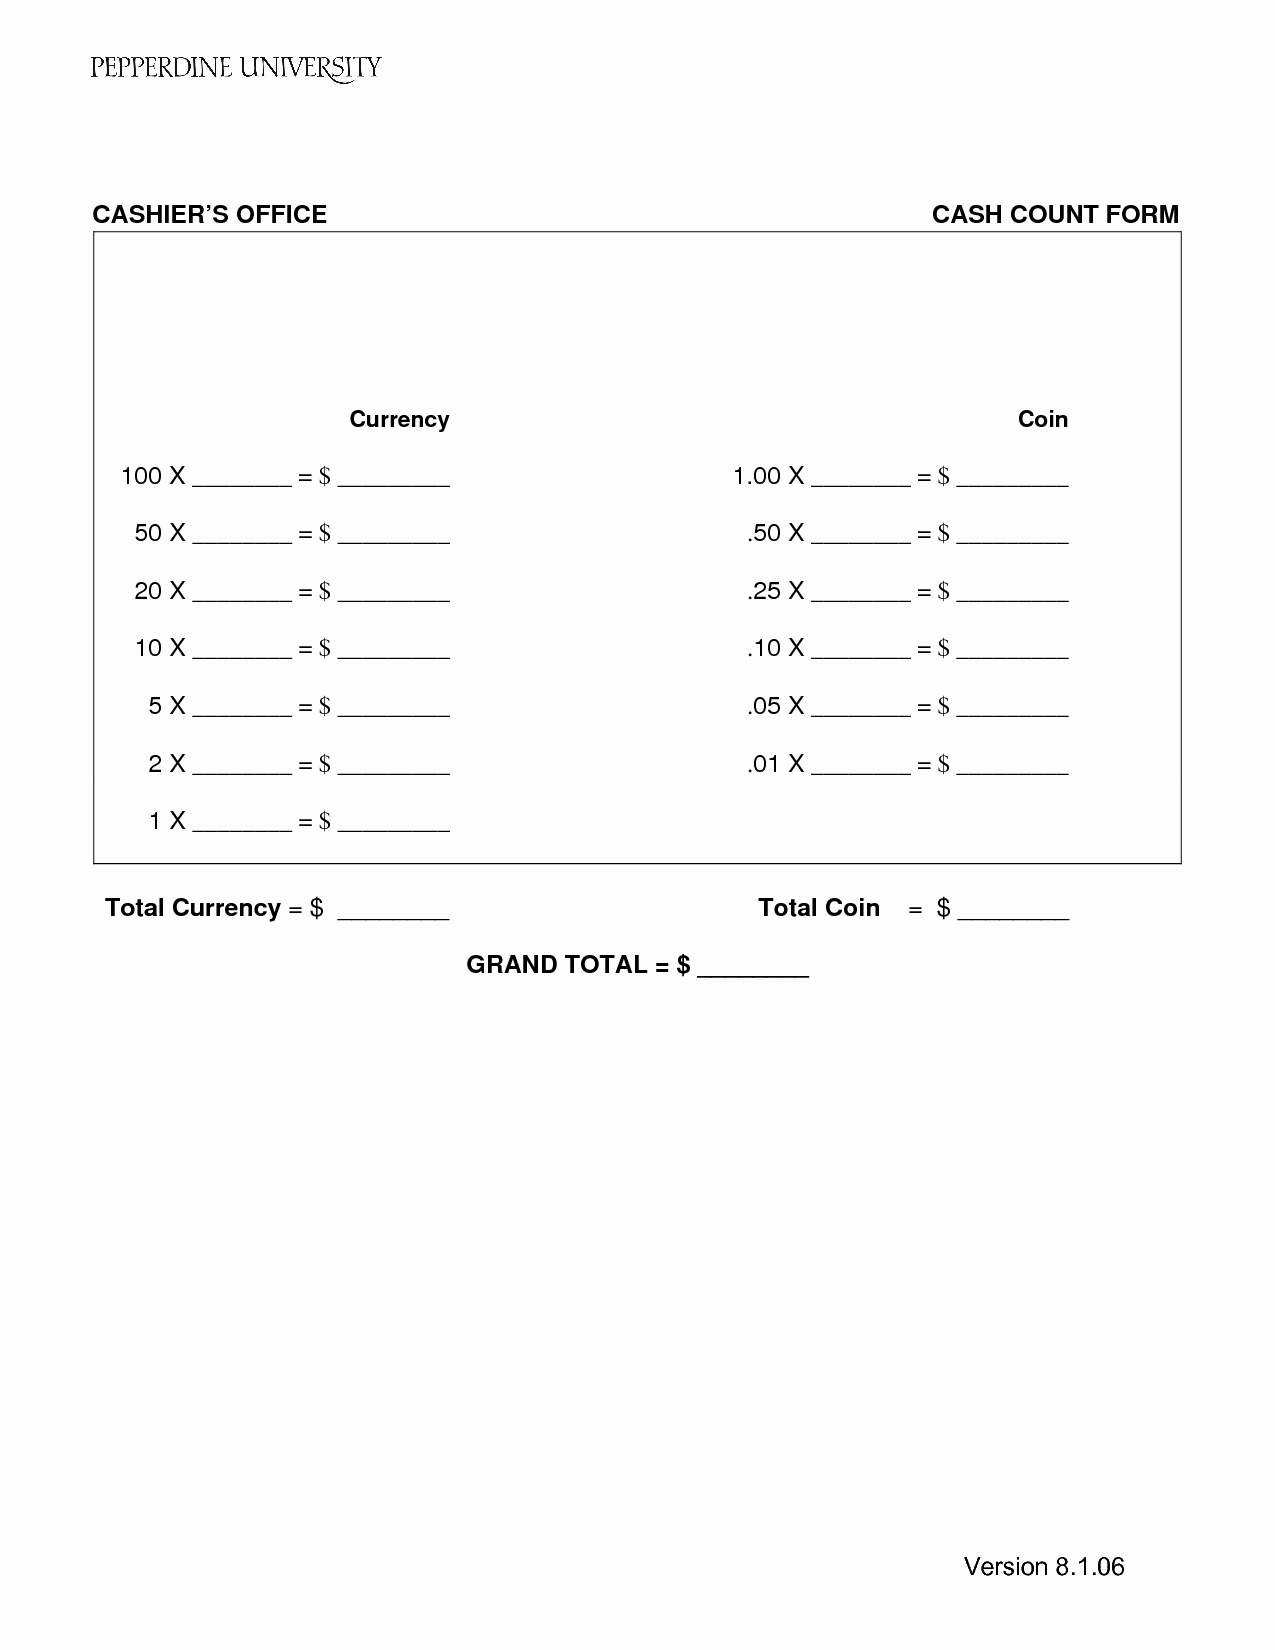 Cash Drawer Count Sheet Excel Unique Best S Of Cash Count Sheet Excel Cash Drawer Count